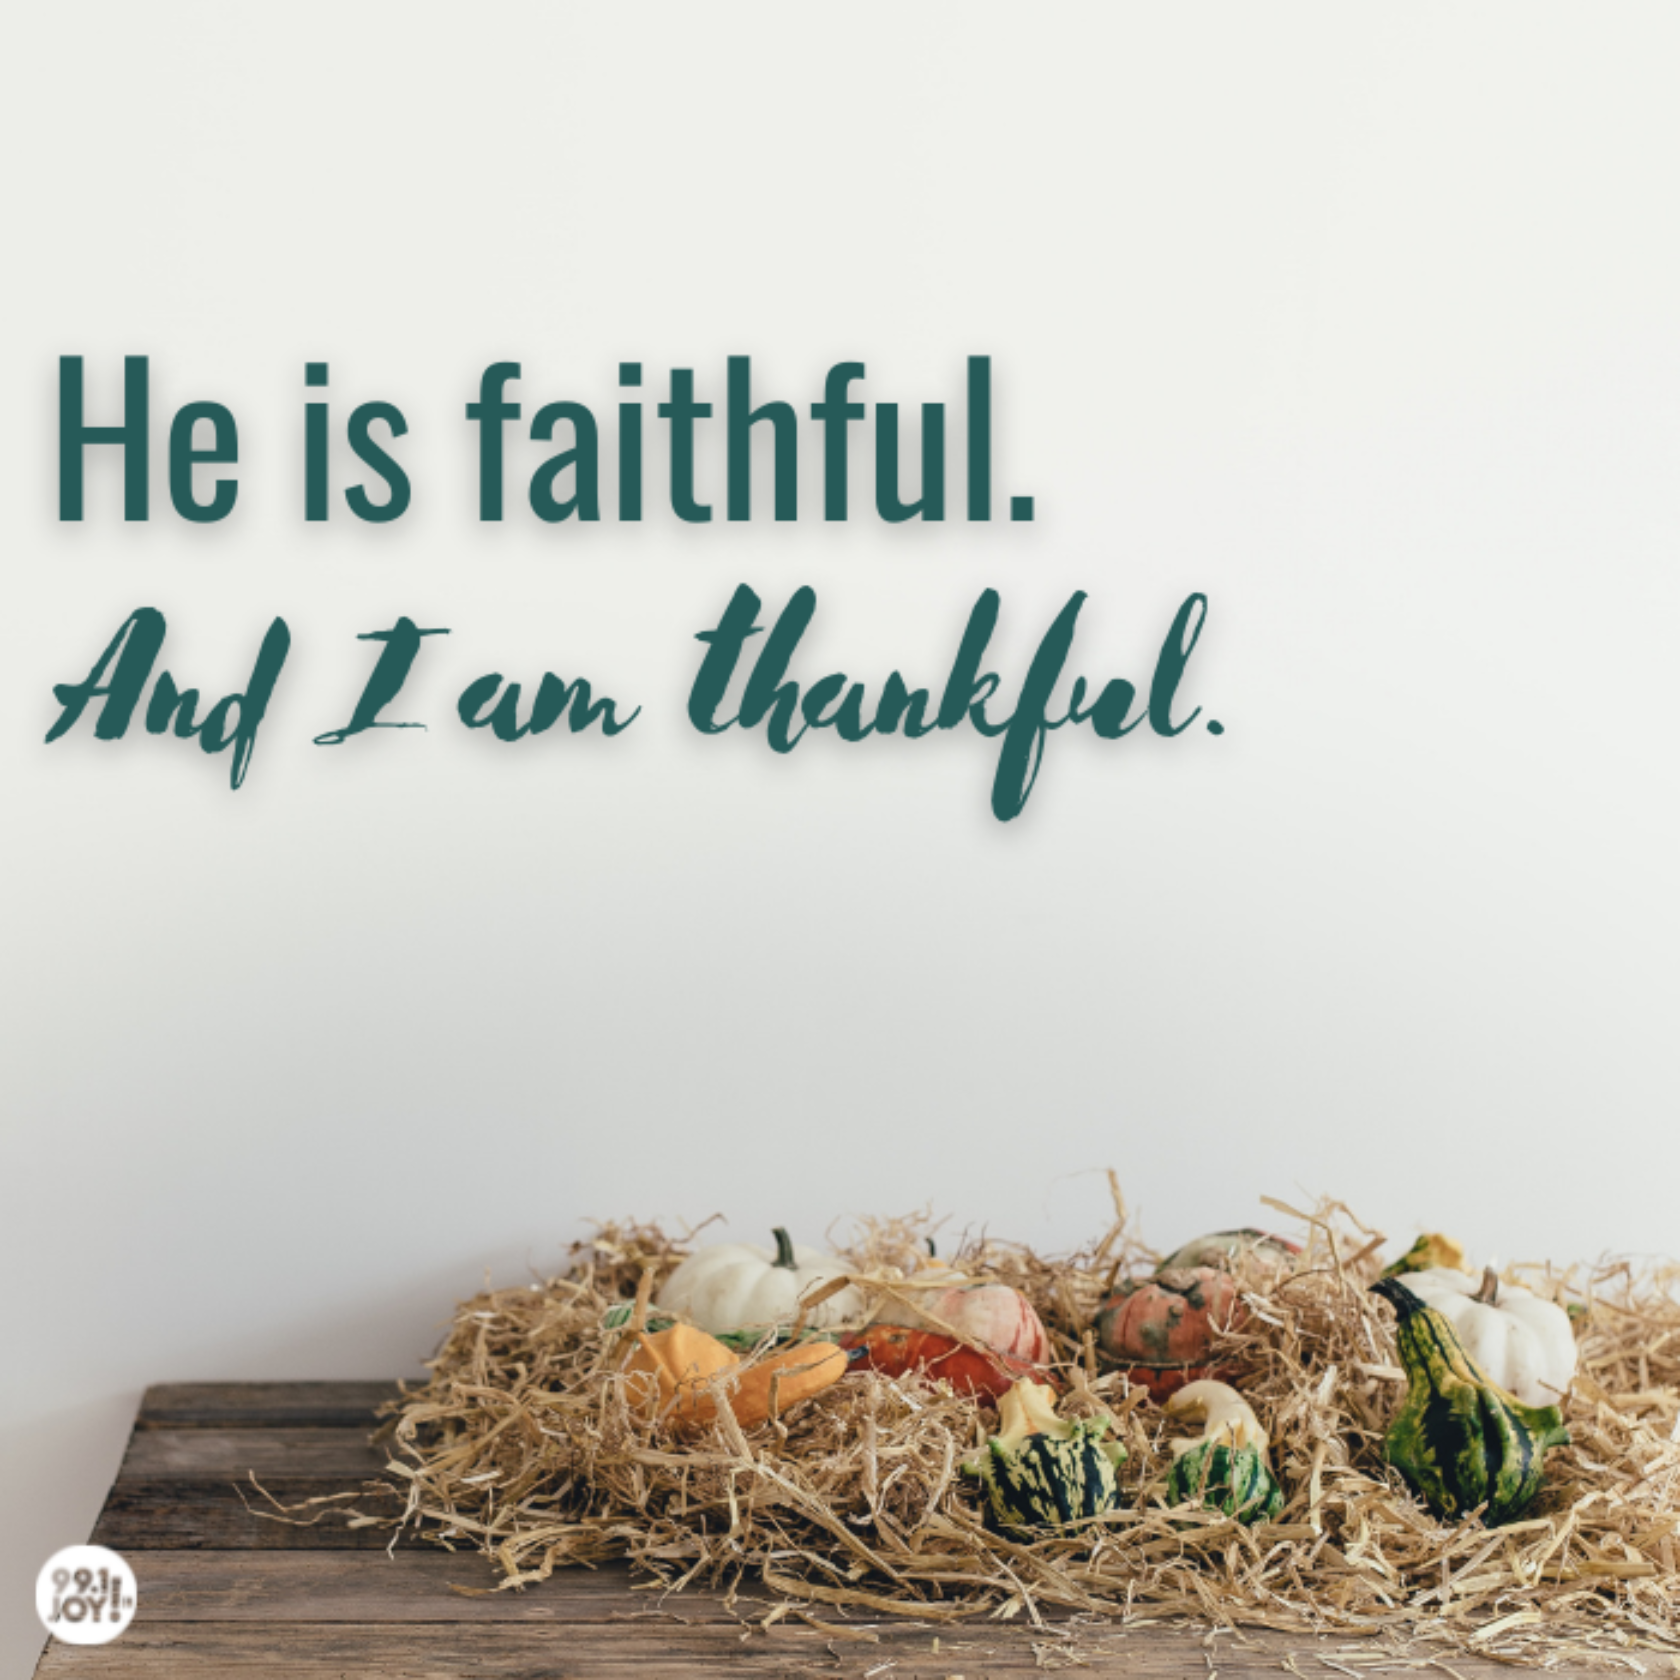 He is faithful. And I am thankful.